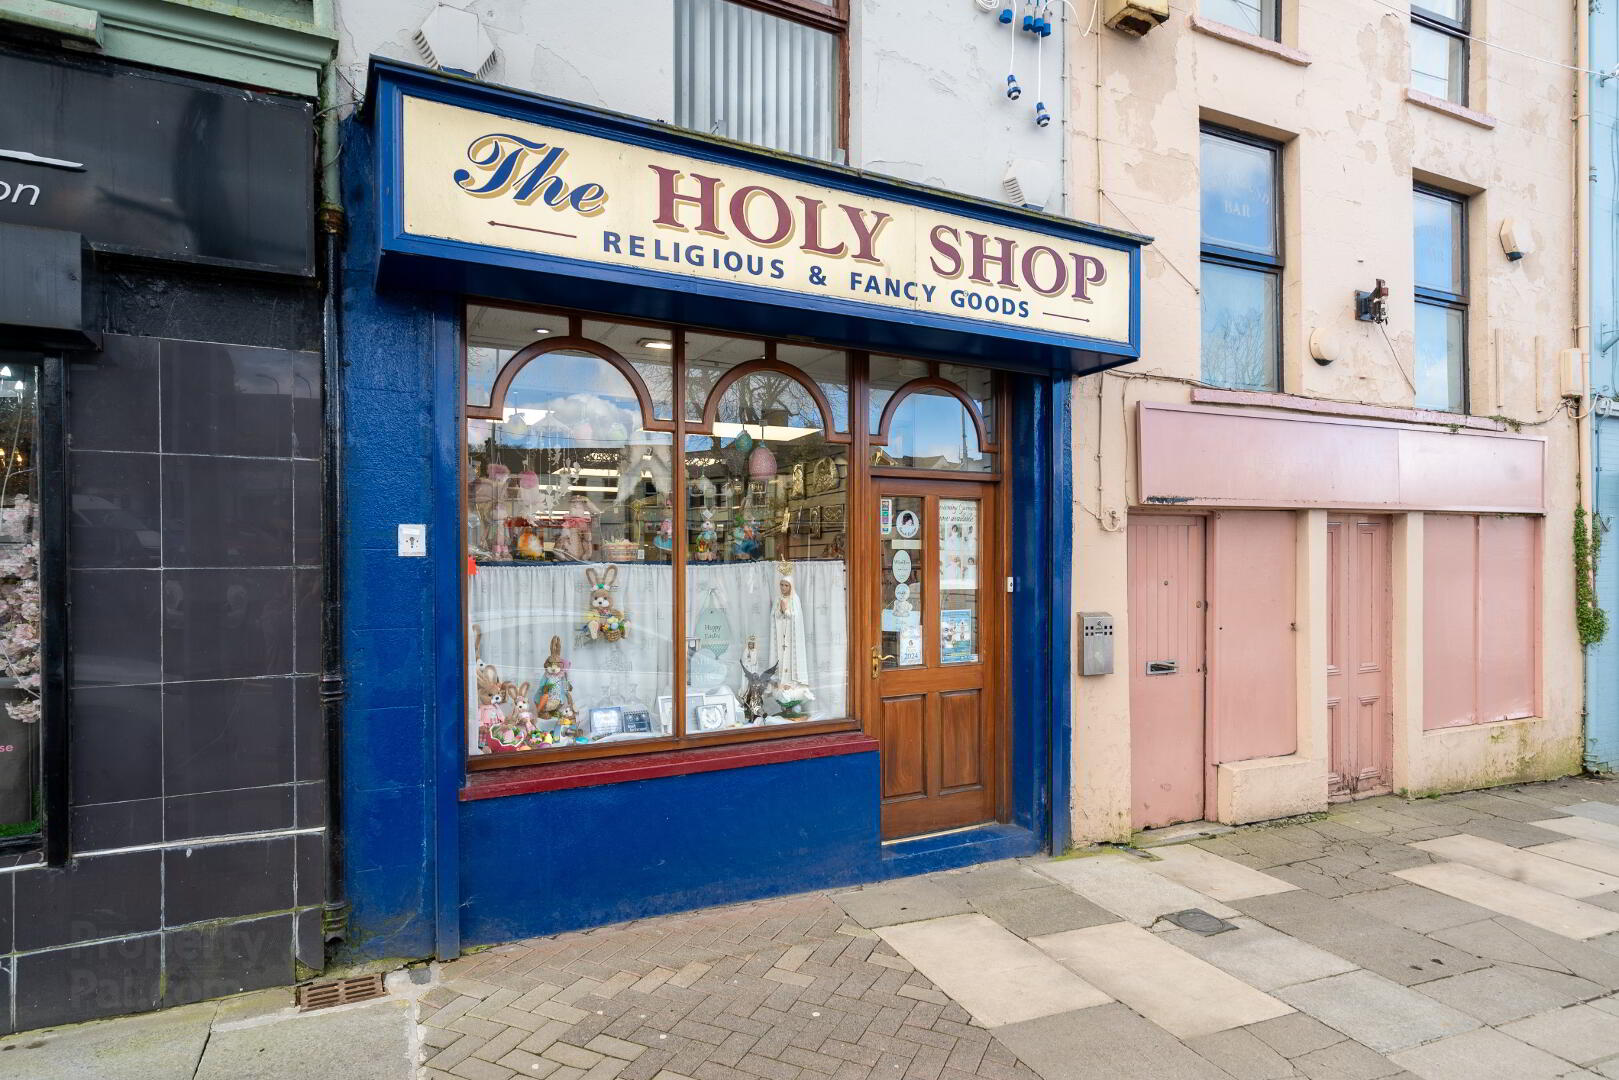 "The Holy Shop", 22 Market Street